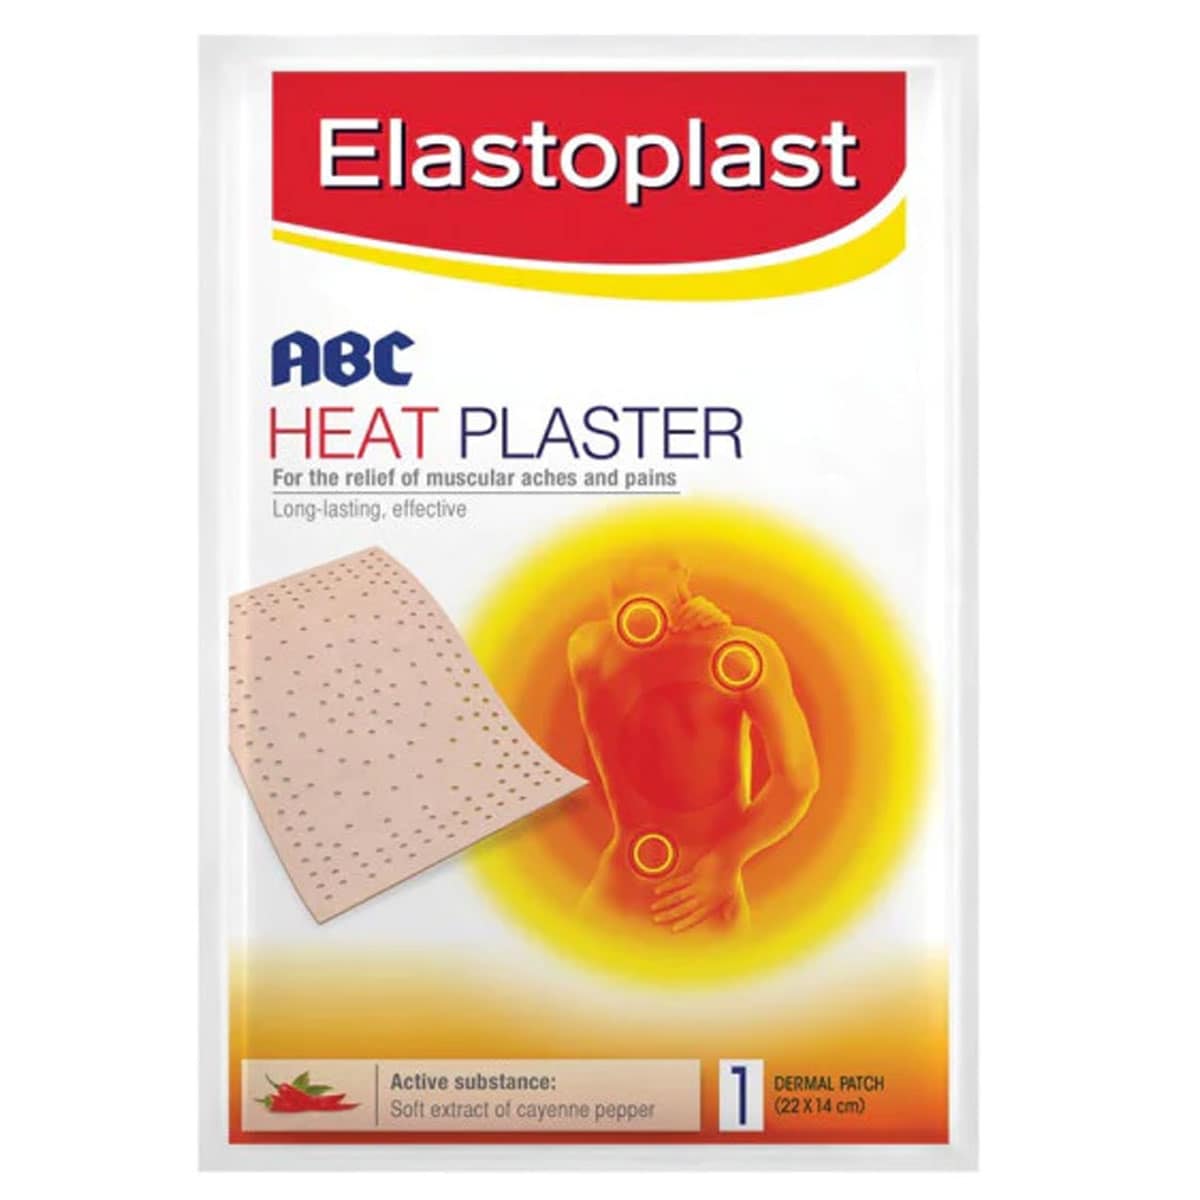 Elastoplast ABC Heat Plaster 22cm x 14cm 1 Dermal Patch